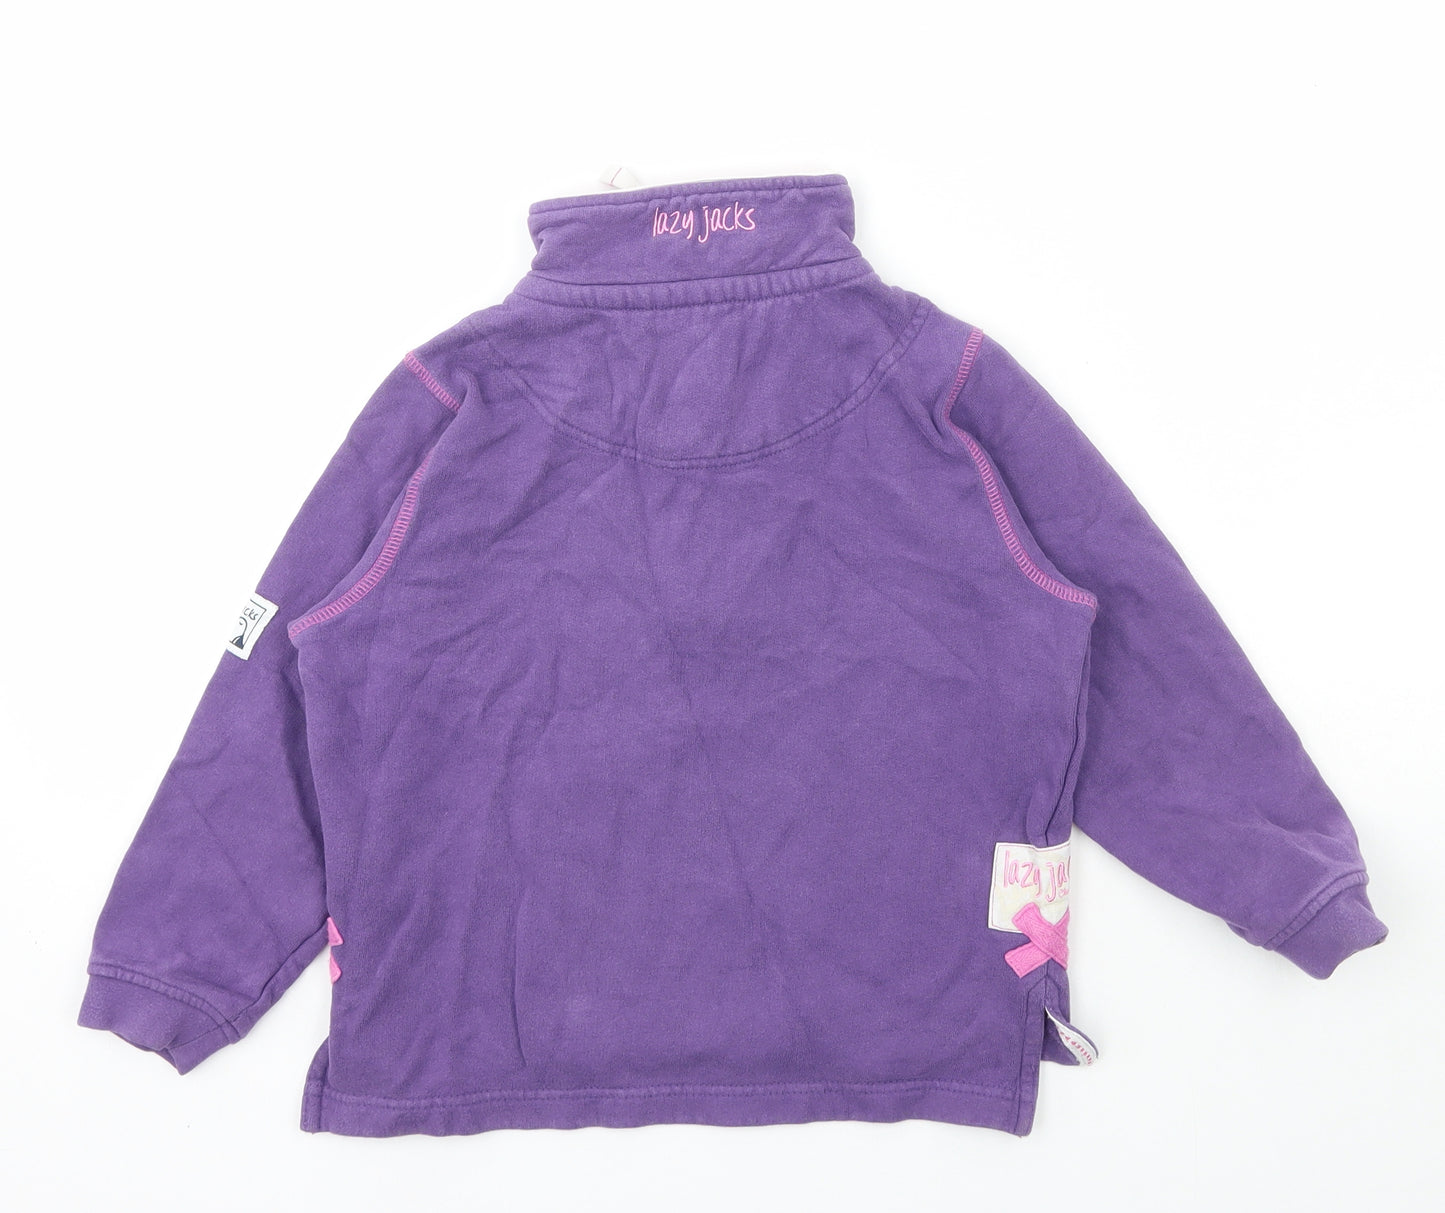 Lazy Jacks Girls Purple Cotton Pullover Sweatshirt Size 5-6 Years Zip